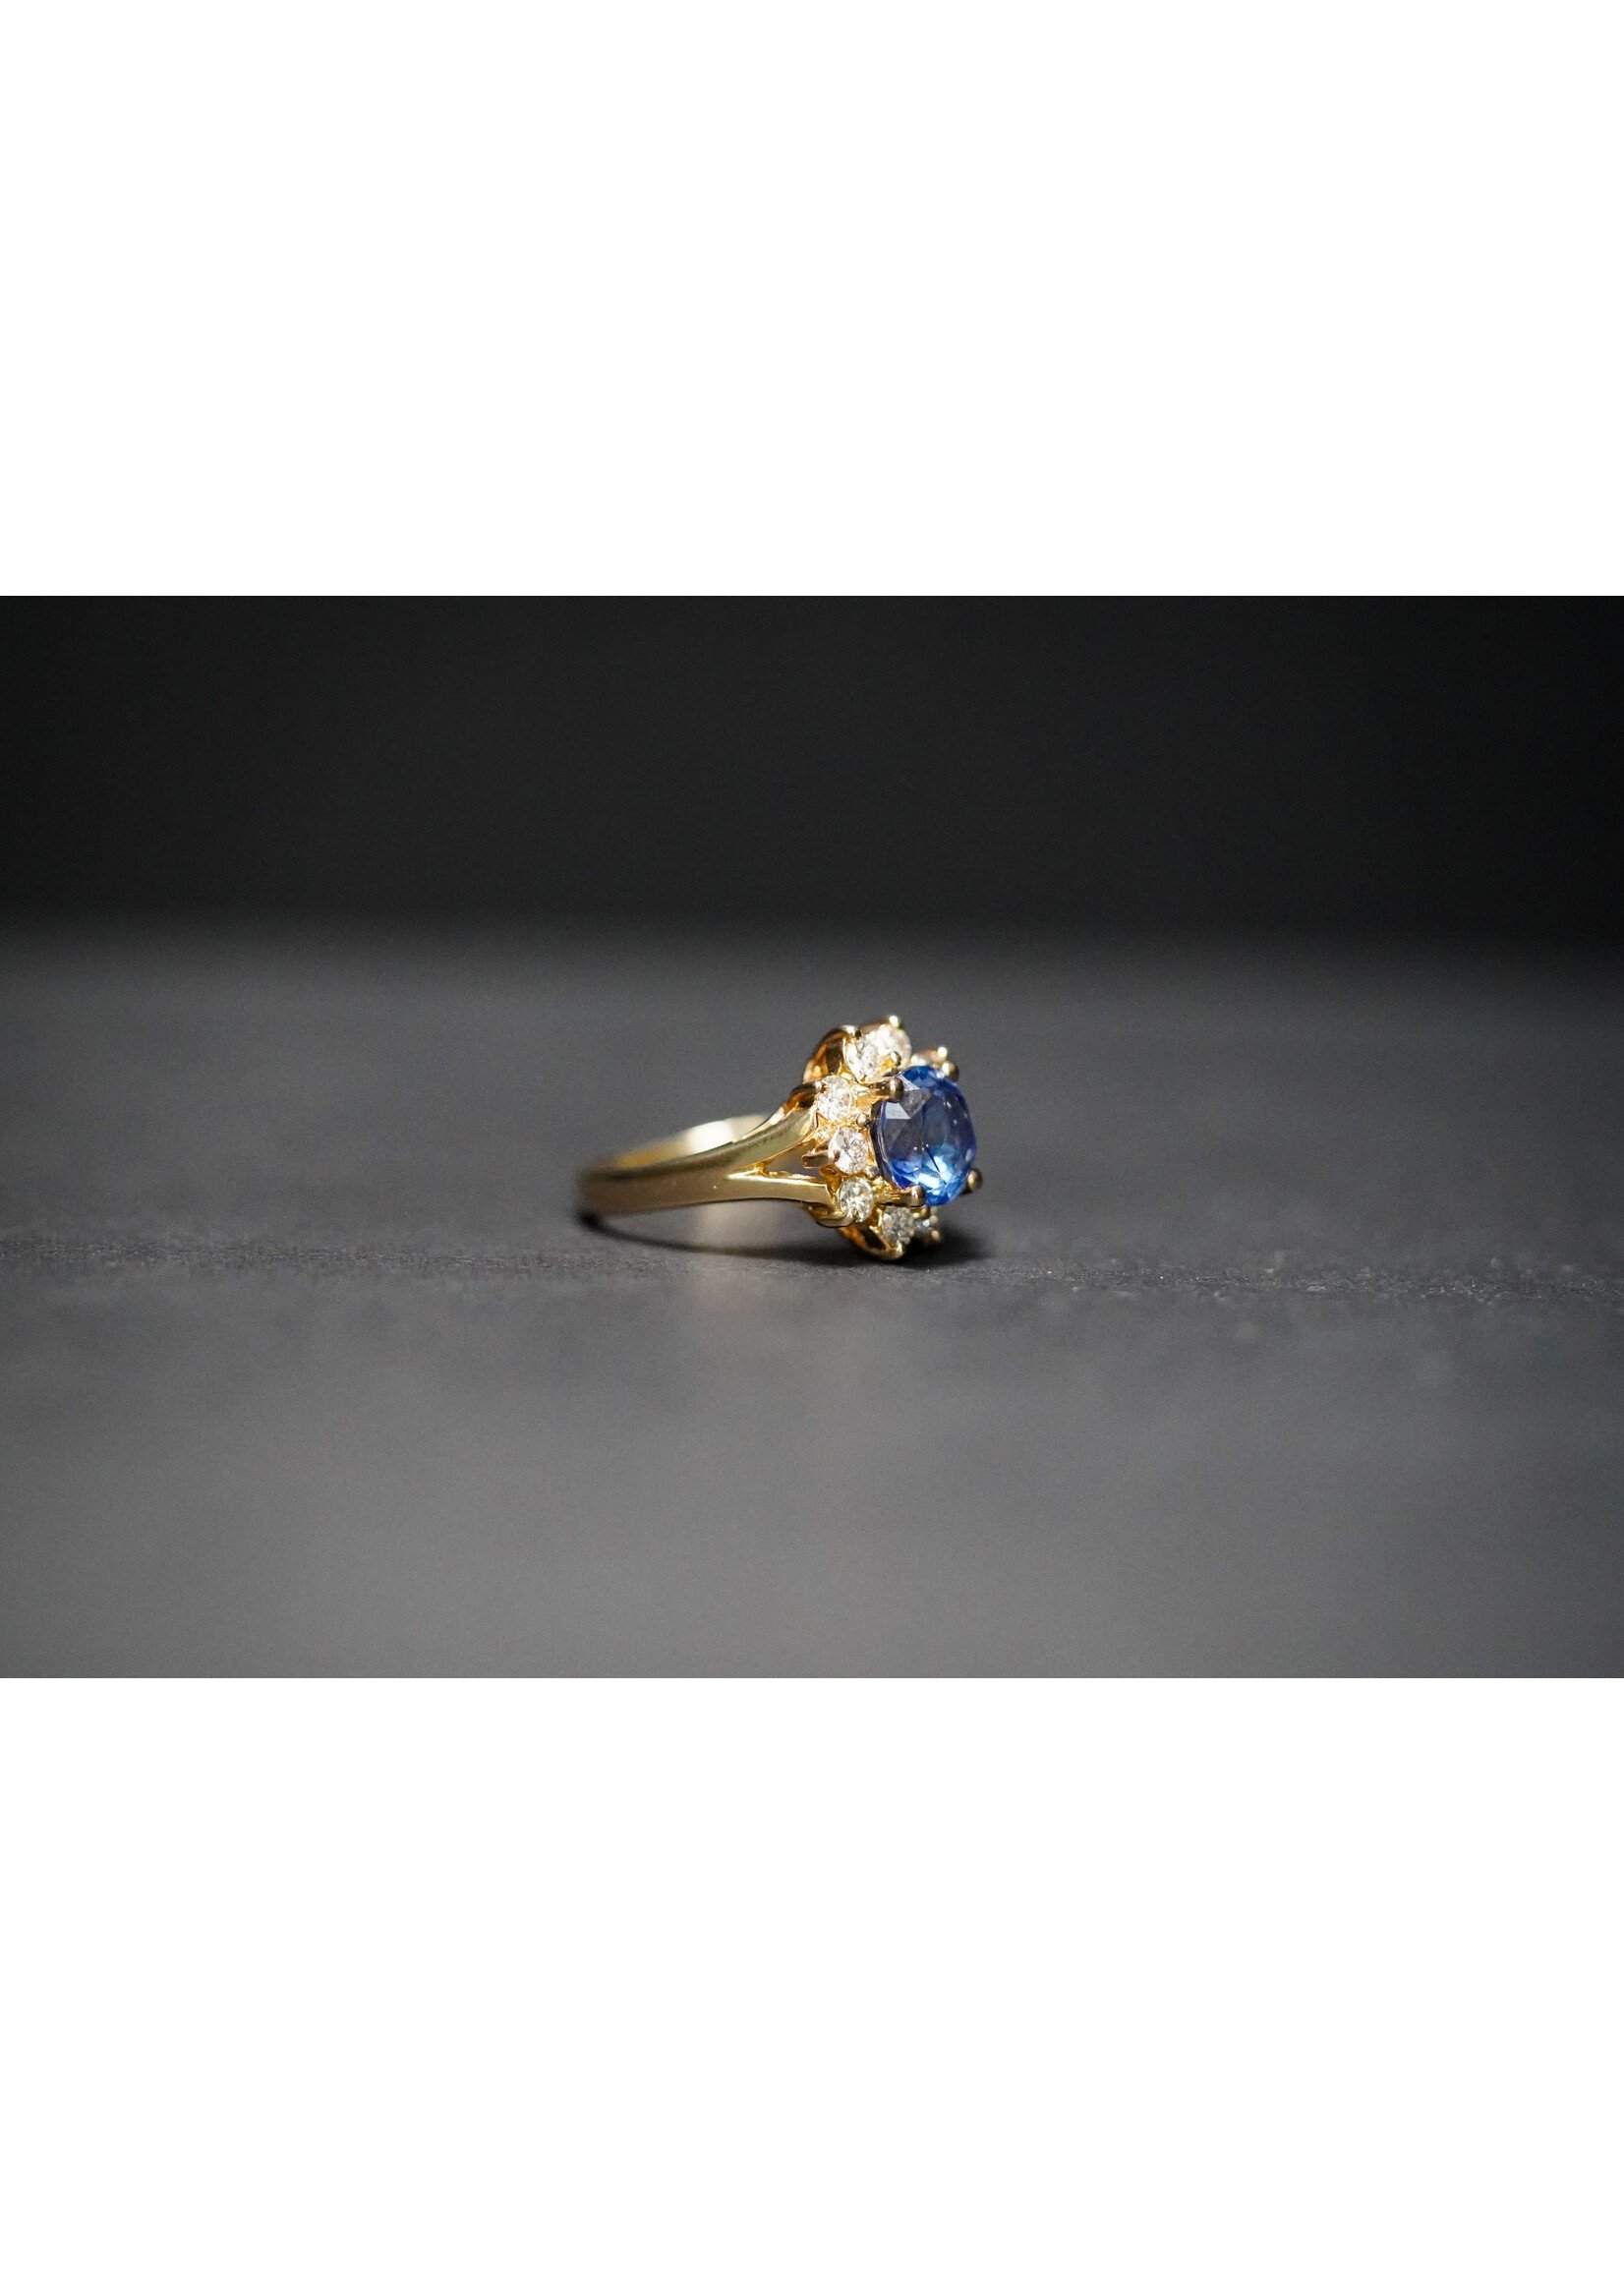 14KY 5.04g 3.35ctw (2.75ctr) Sapphire & Diamond Halo Ring (size 7)